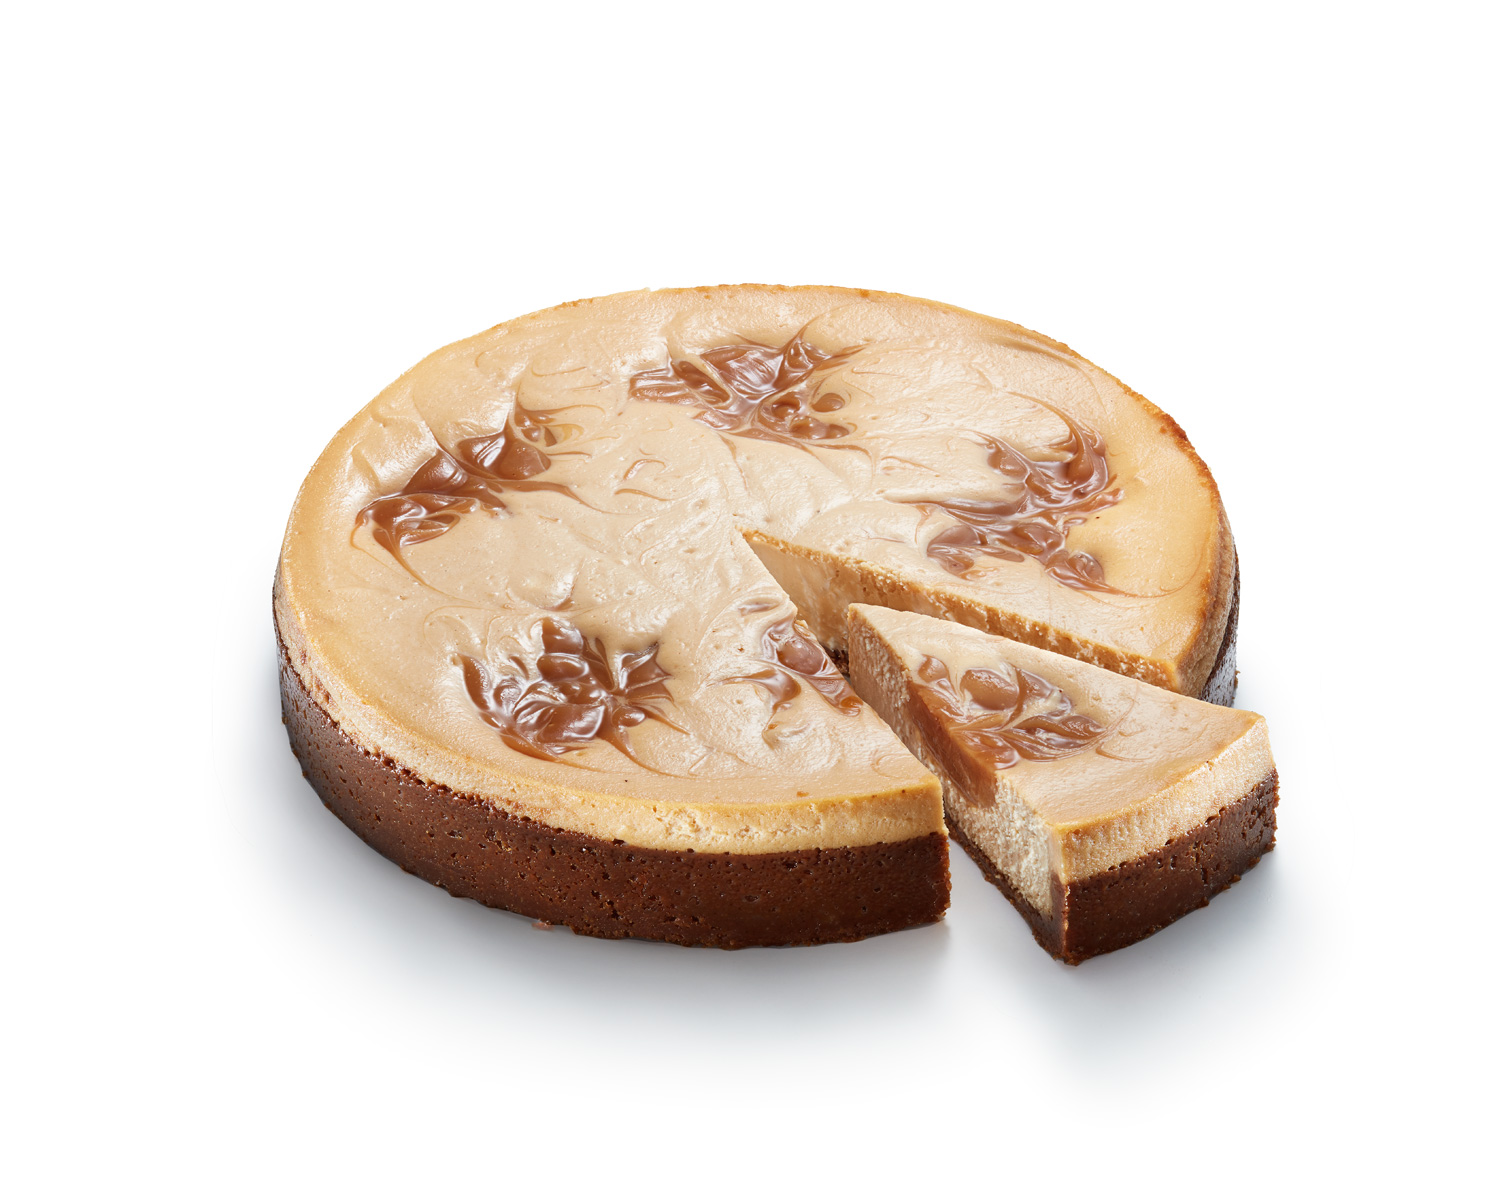 21460-Cheesecake-Salted-Caramel-1600g-1